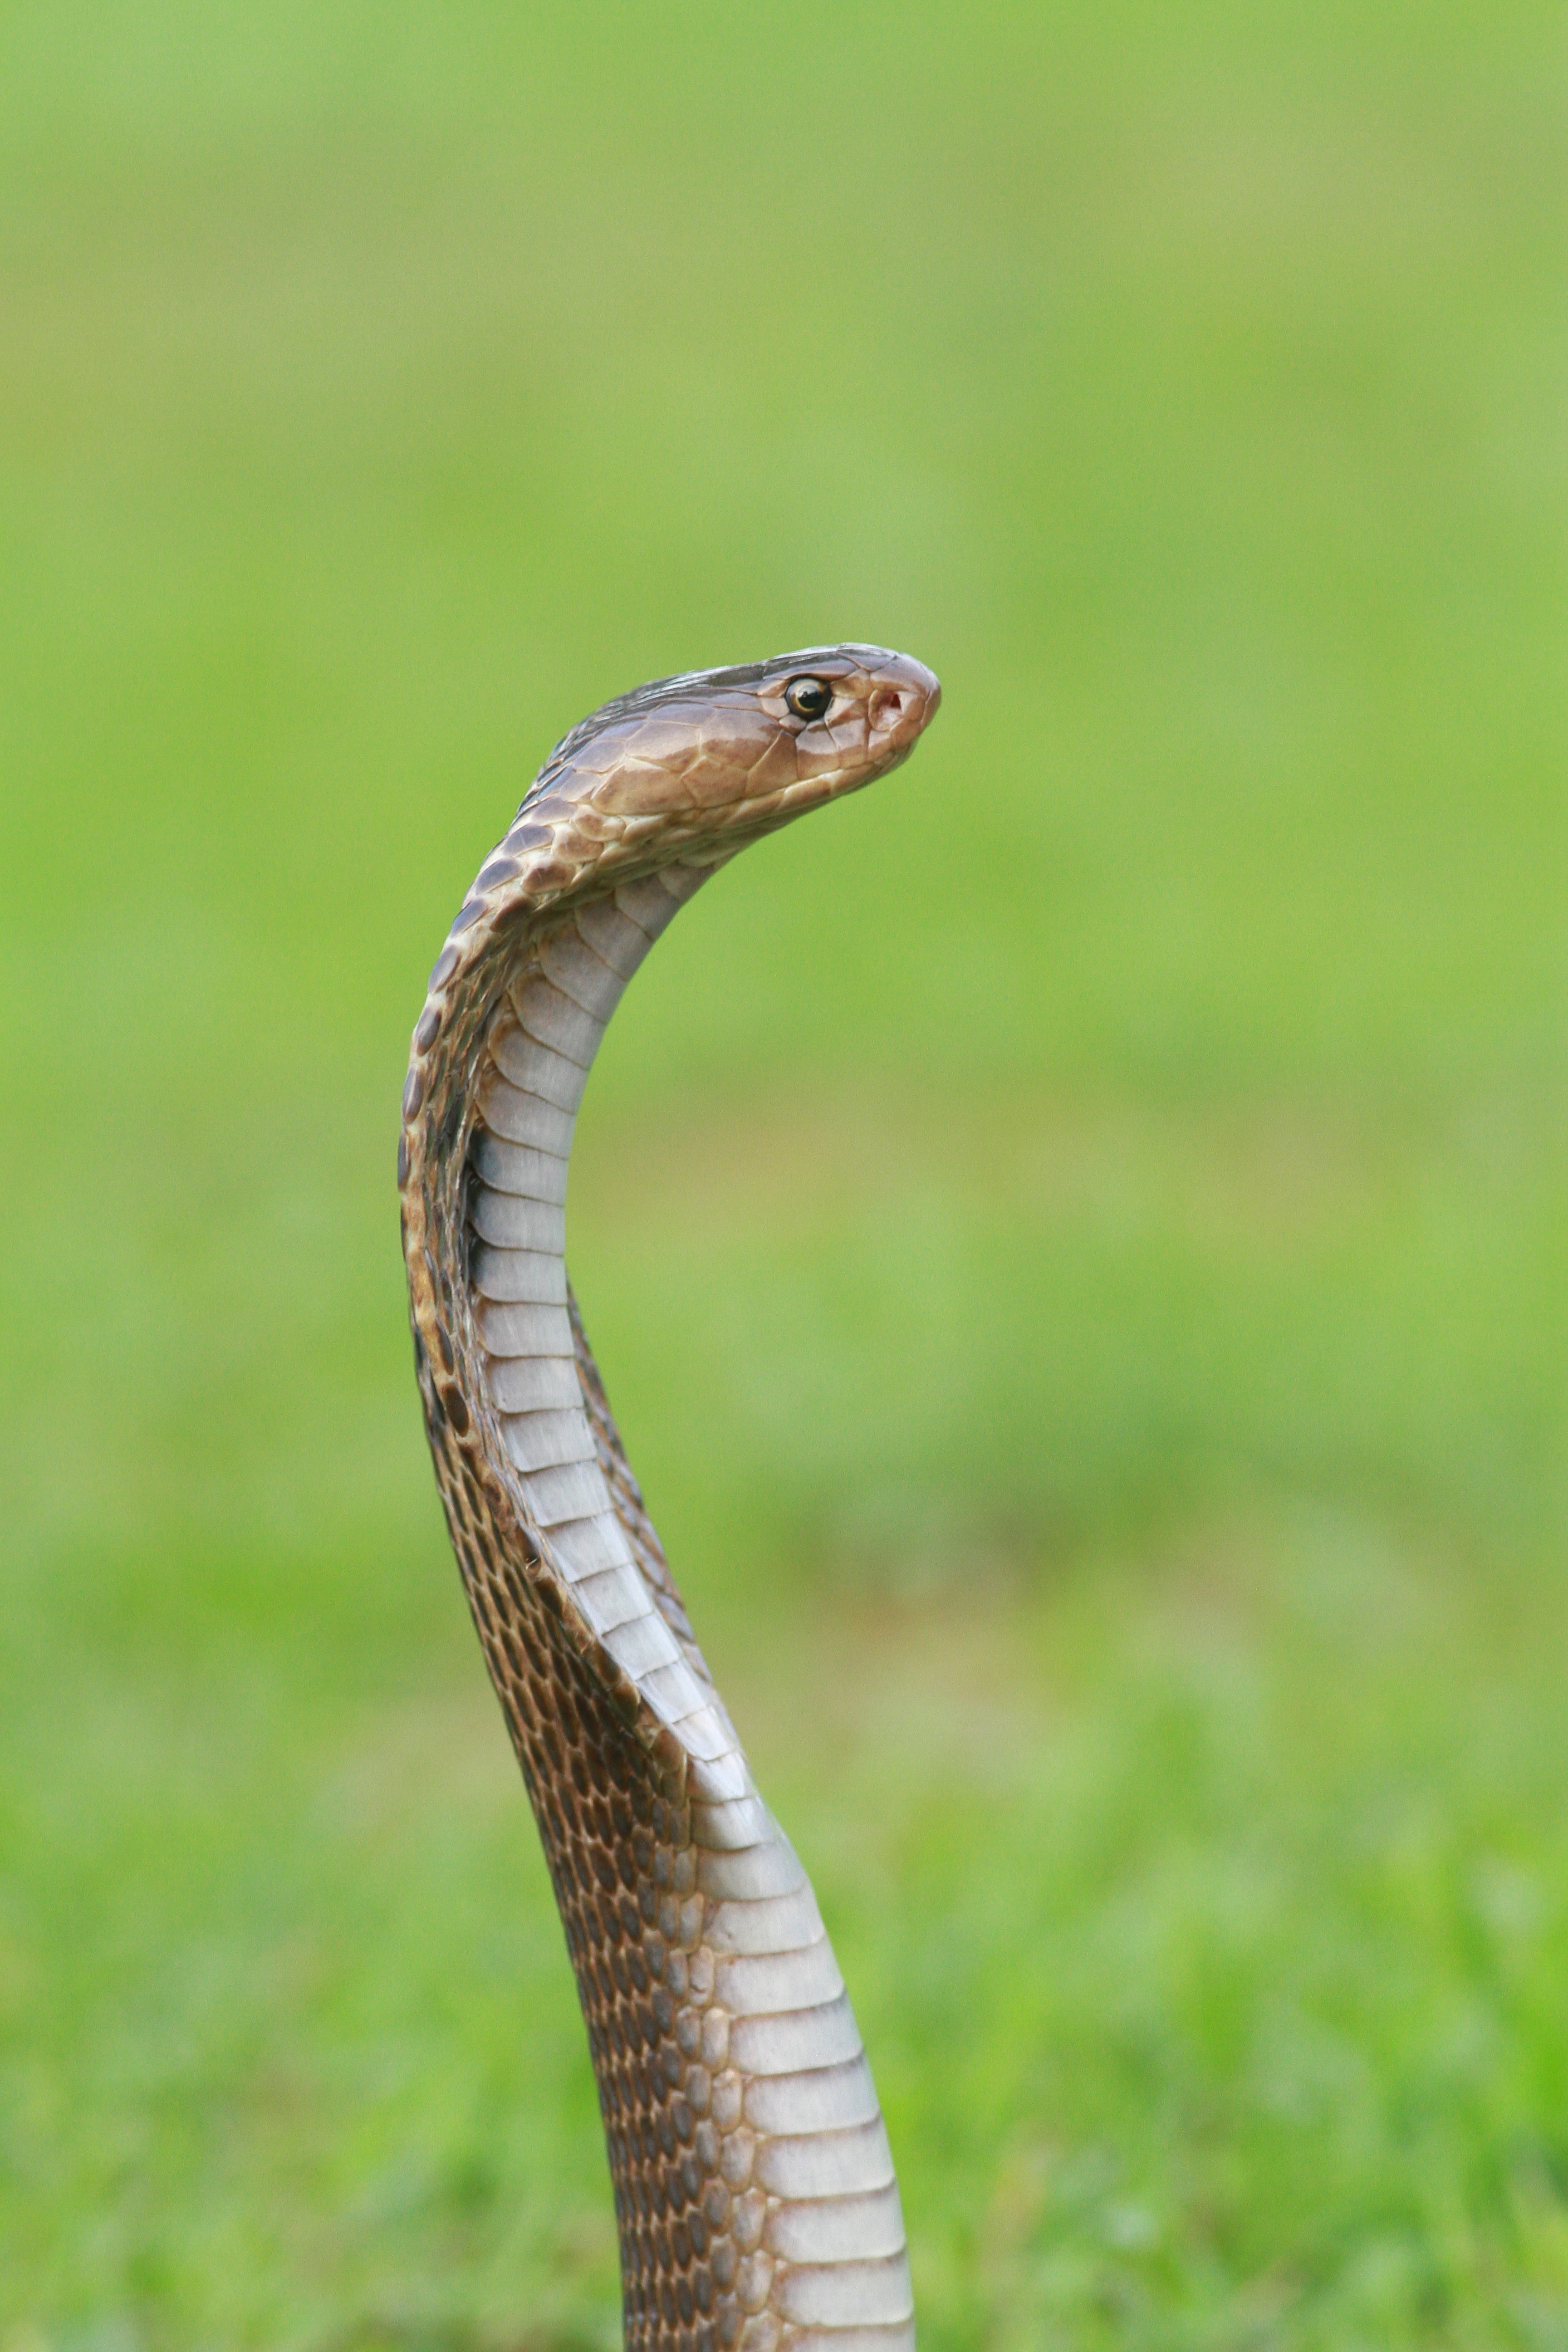 Eastern Hognose Snake Deserves An Oscar For Death Performance Of A